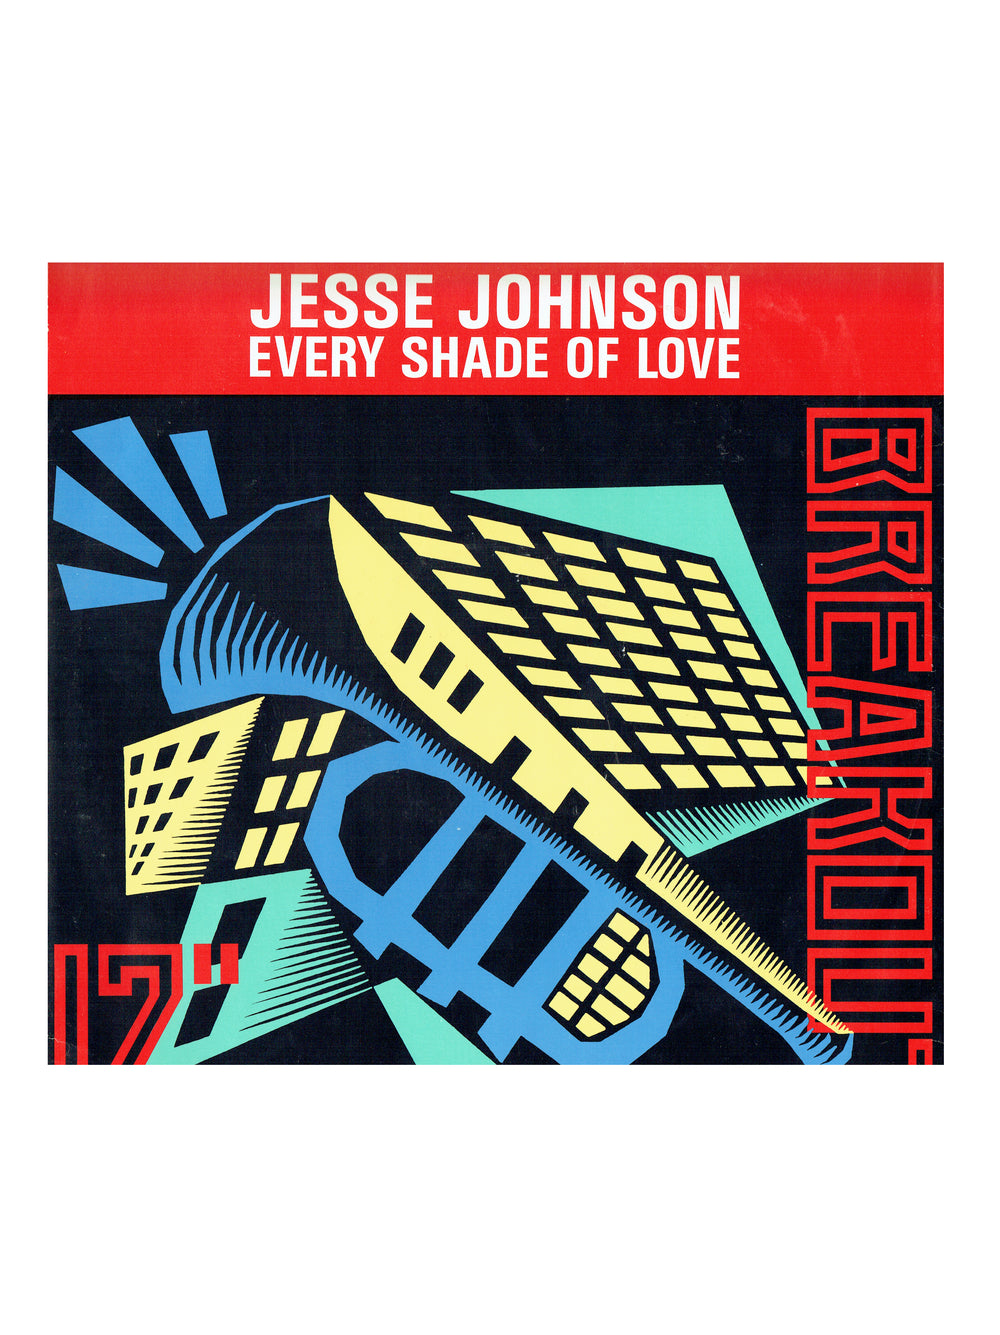 Jesse Johnson Every Shade Of Love 12 Inch Vinyl 1986 UK Original Prince SMS